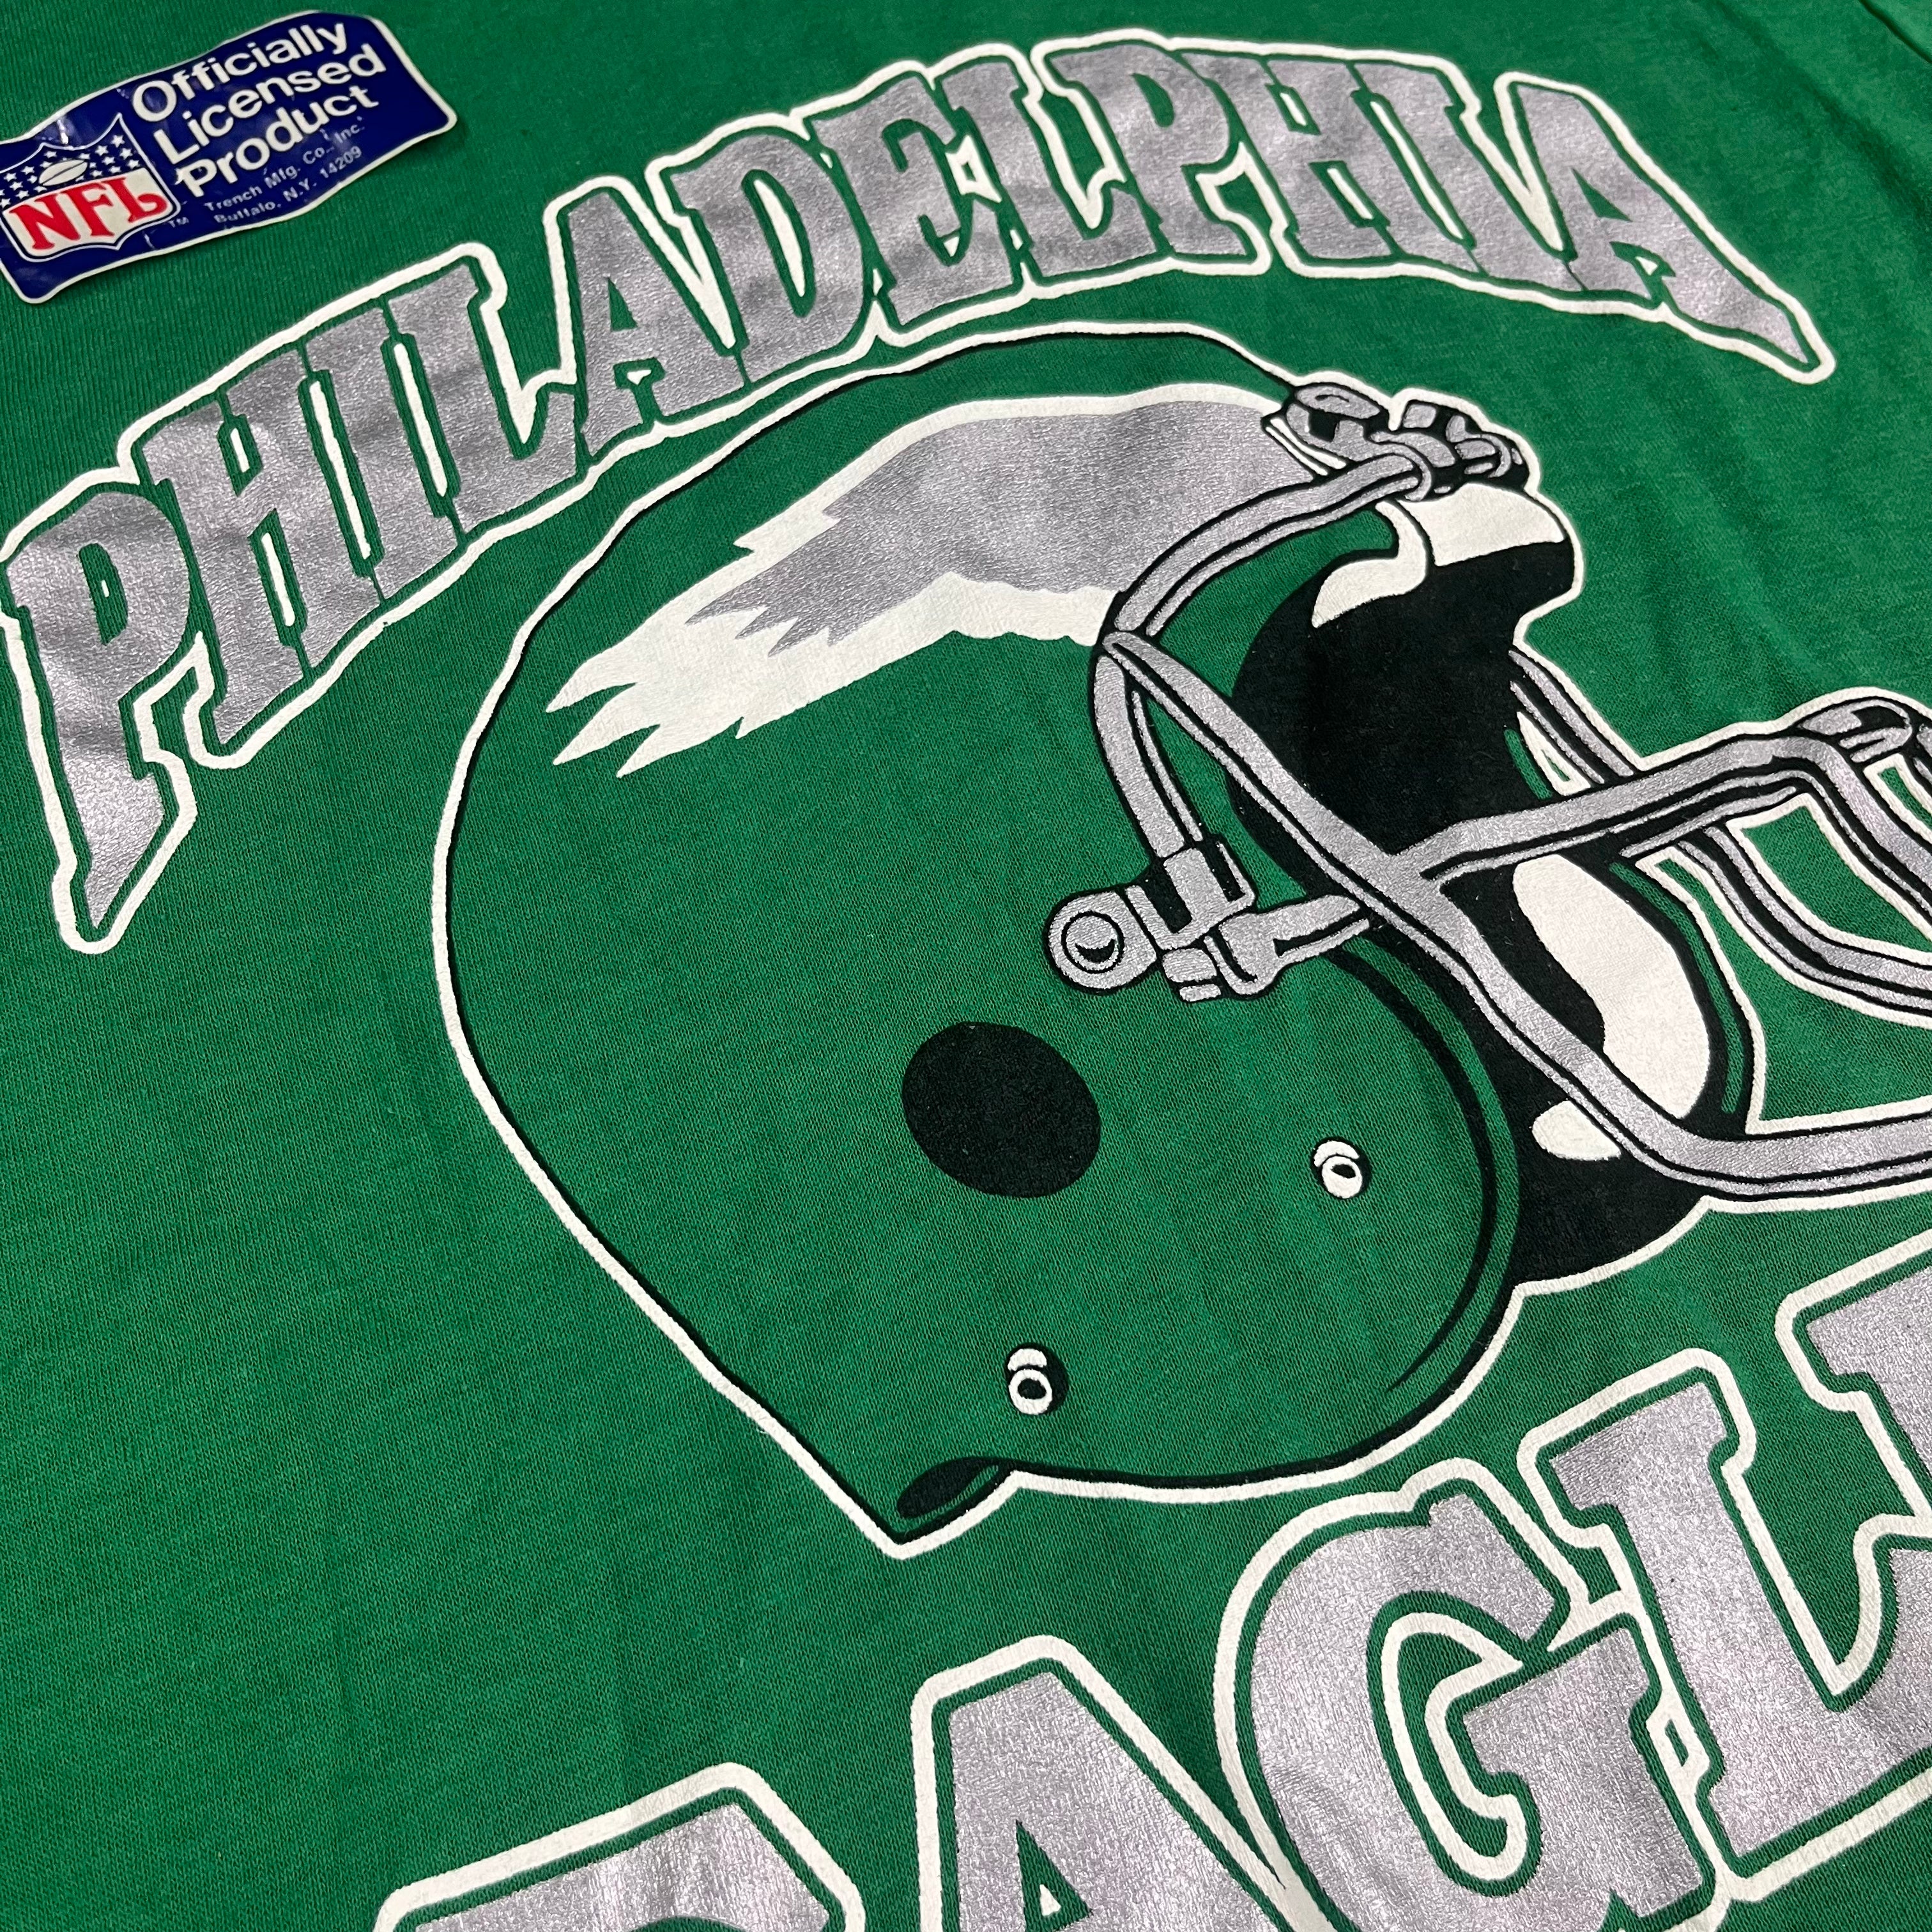 philadelphia eagles founded